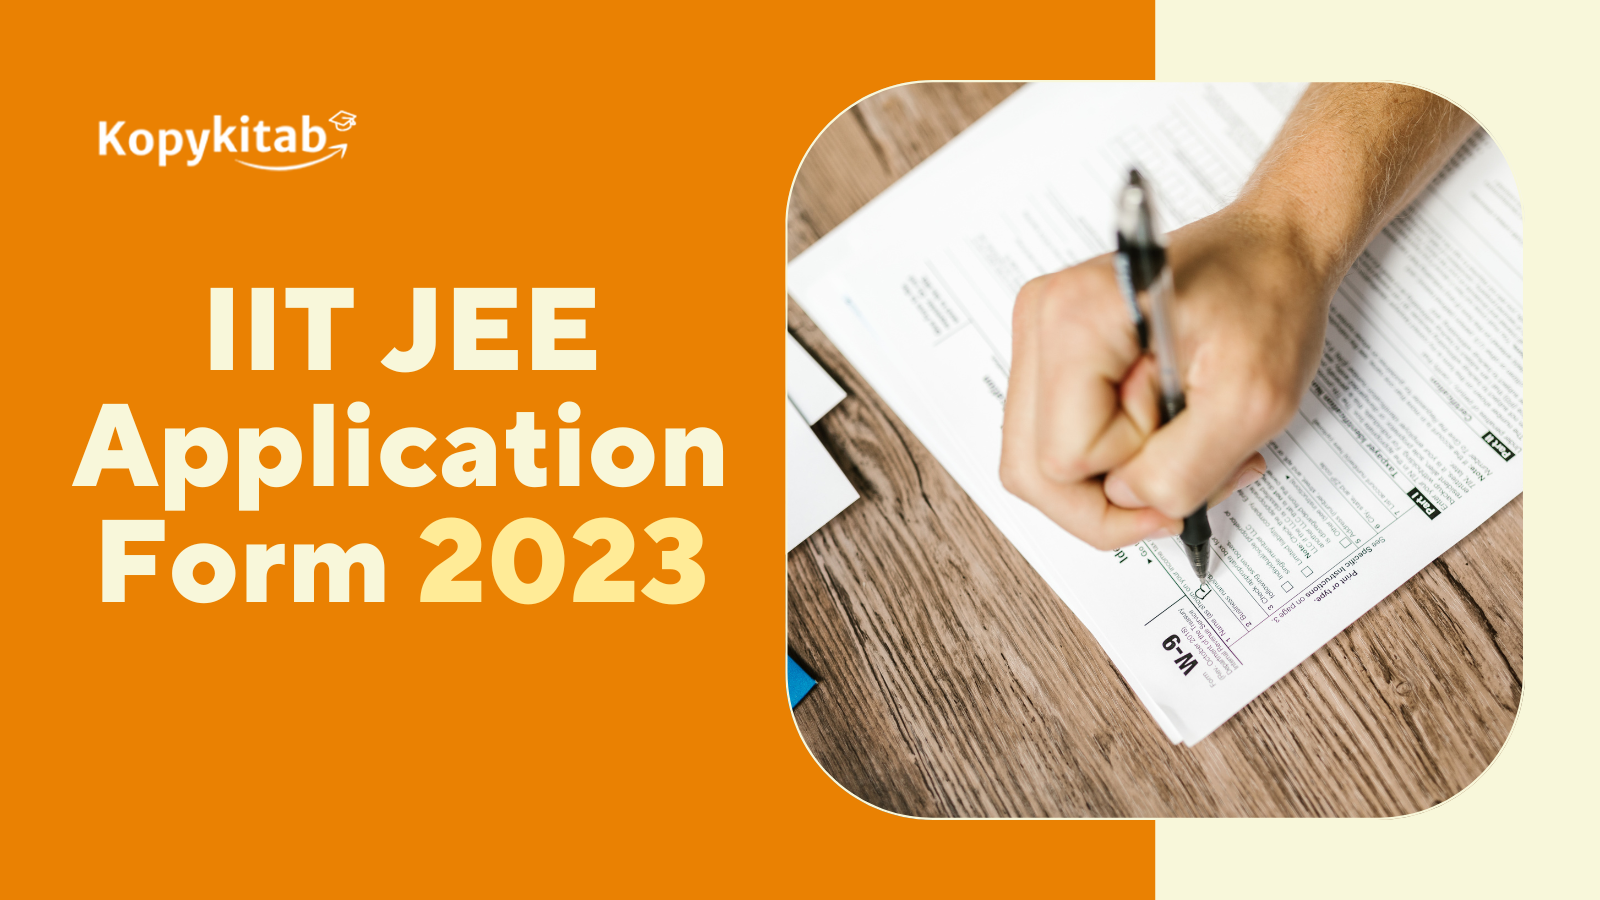 IIT JEE Application Form 2023